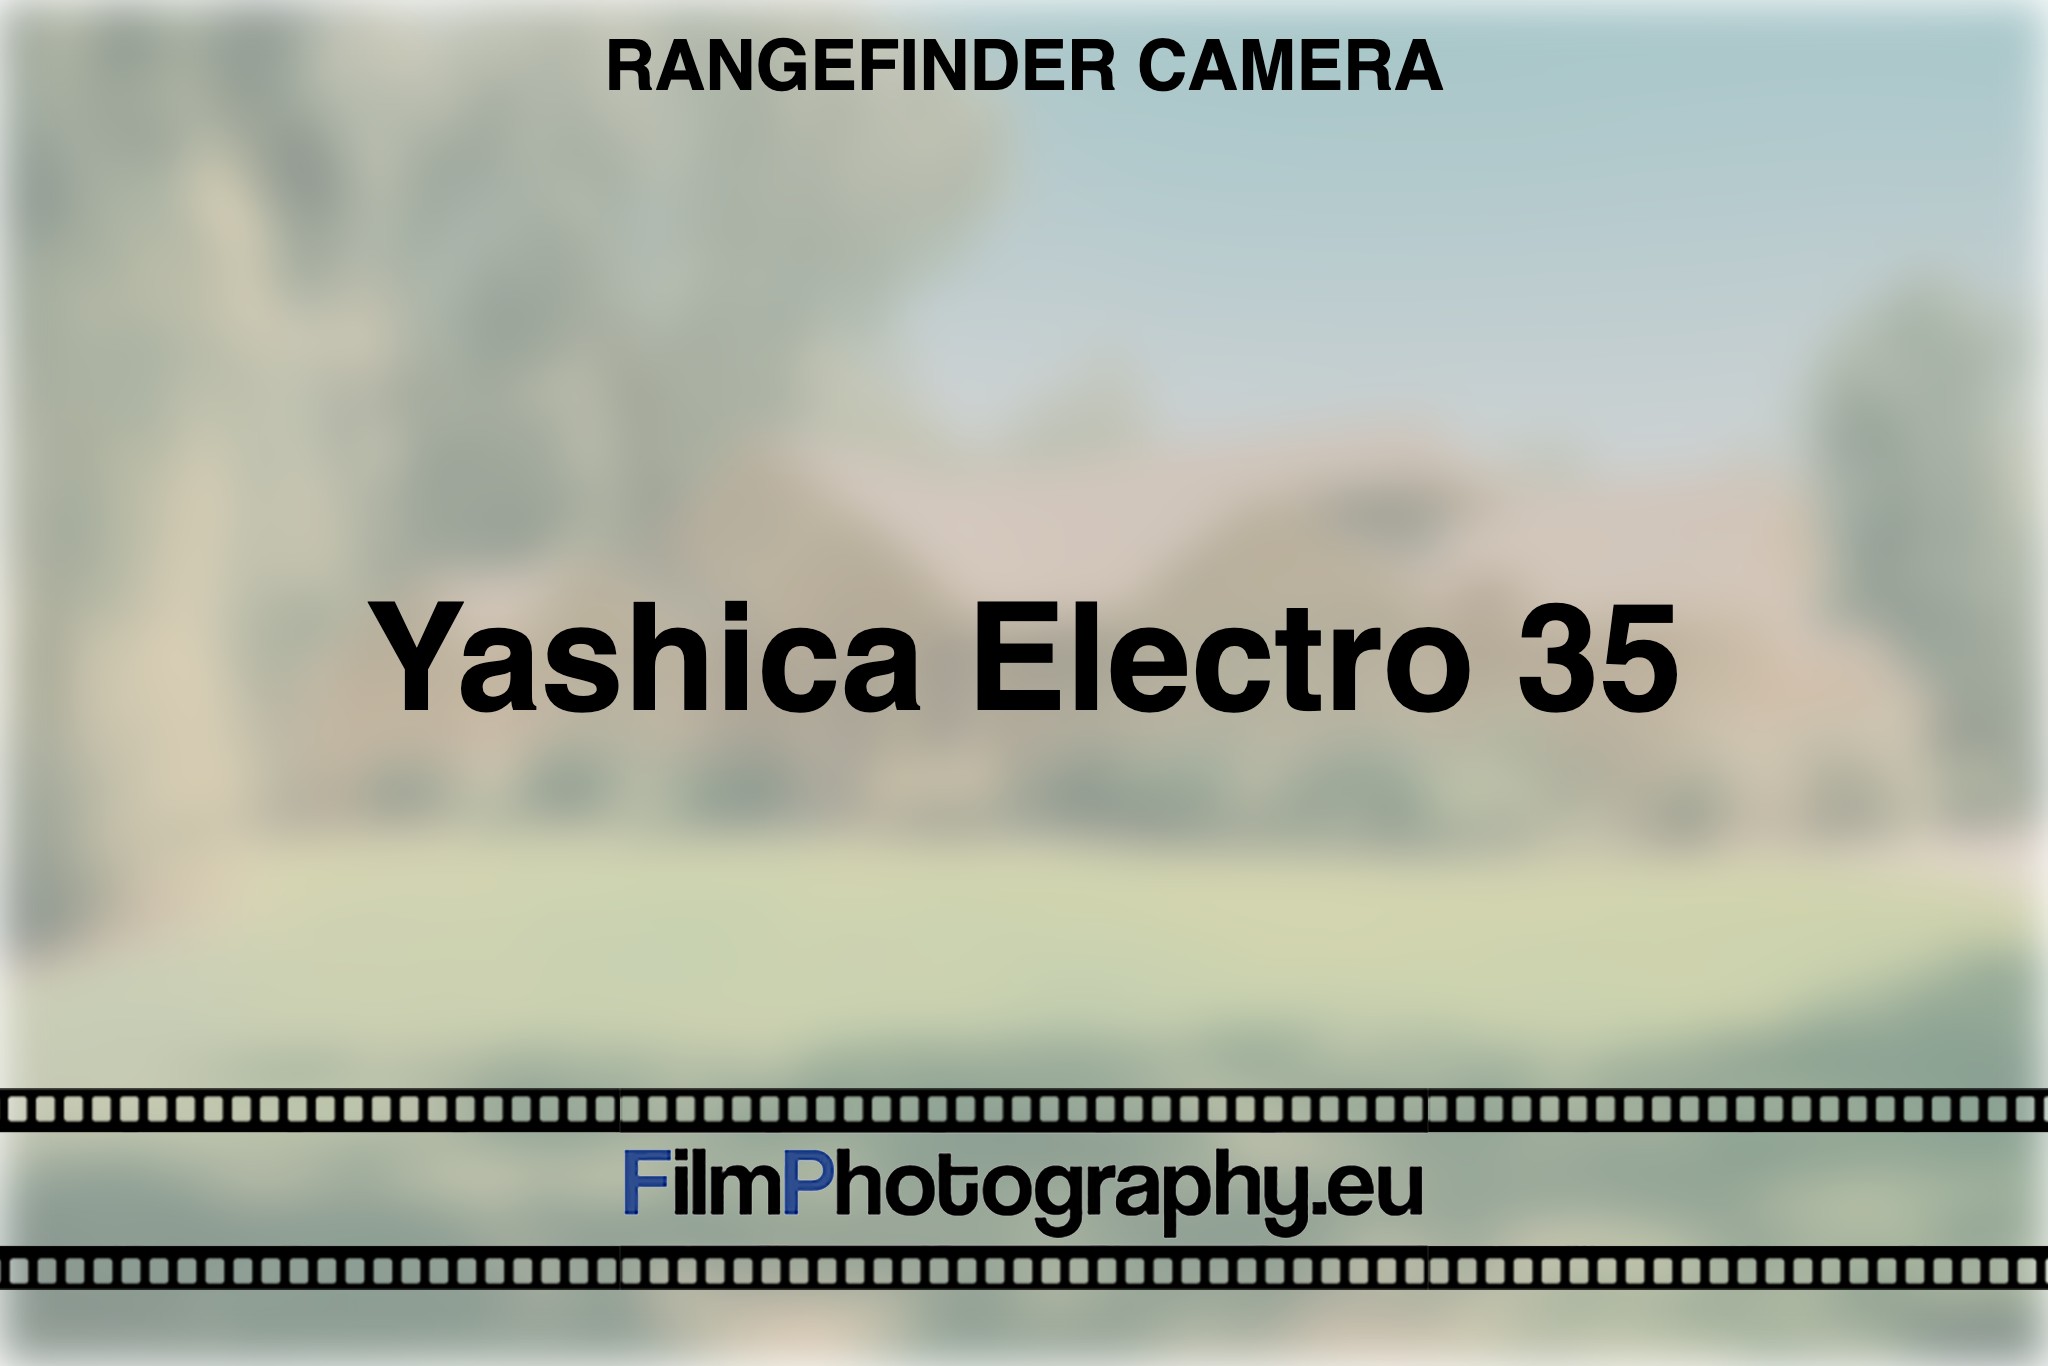 yashica-electro-35-rangefinder-camera-bnv